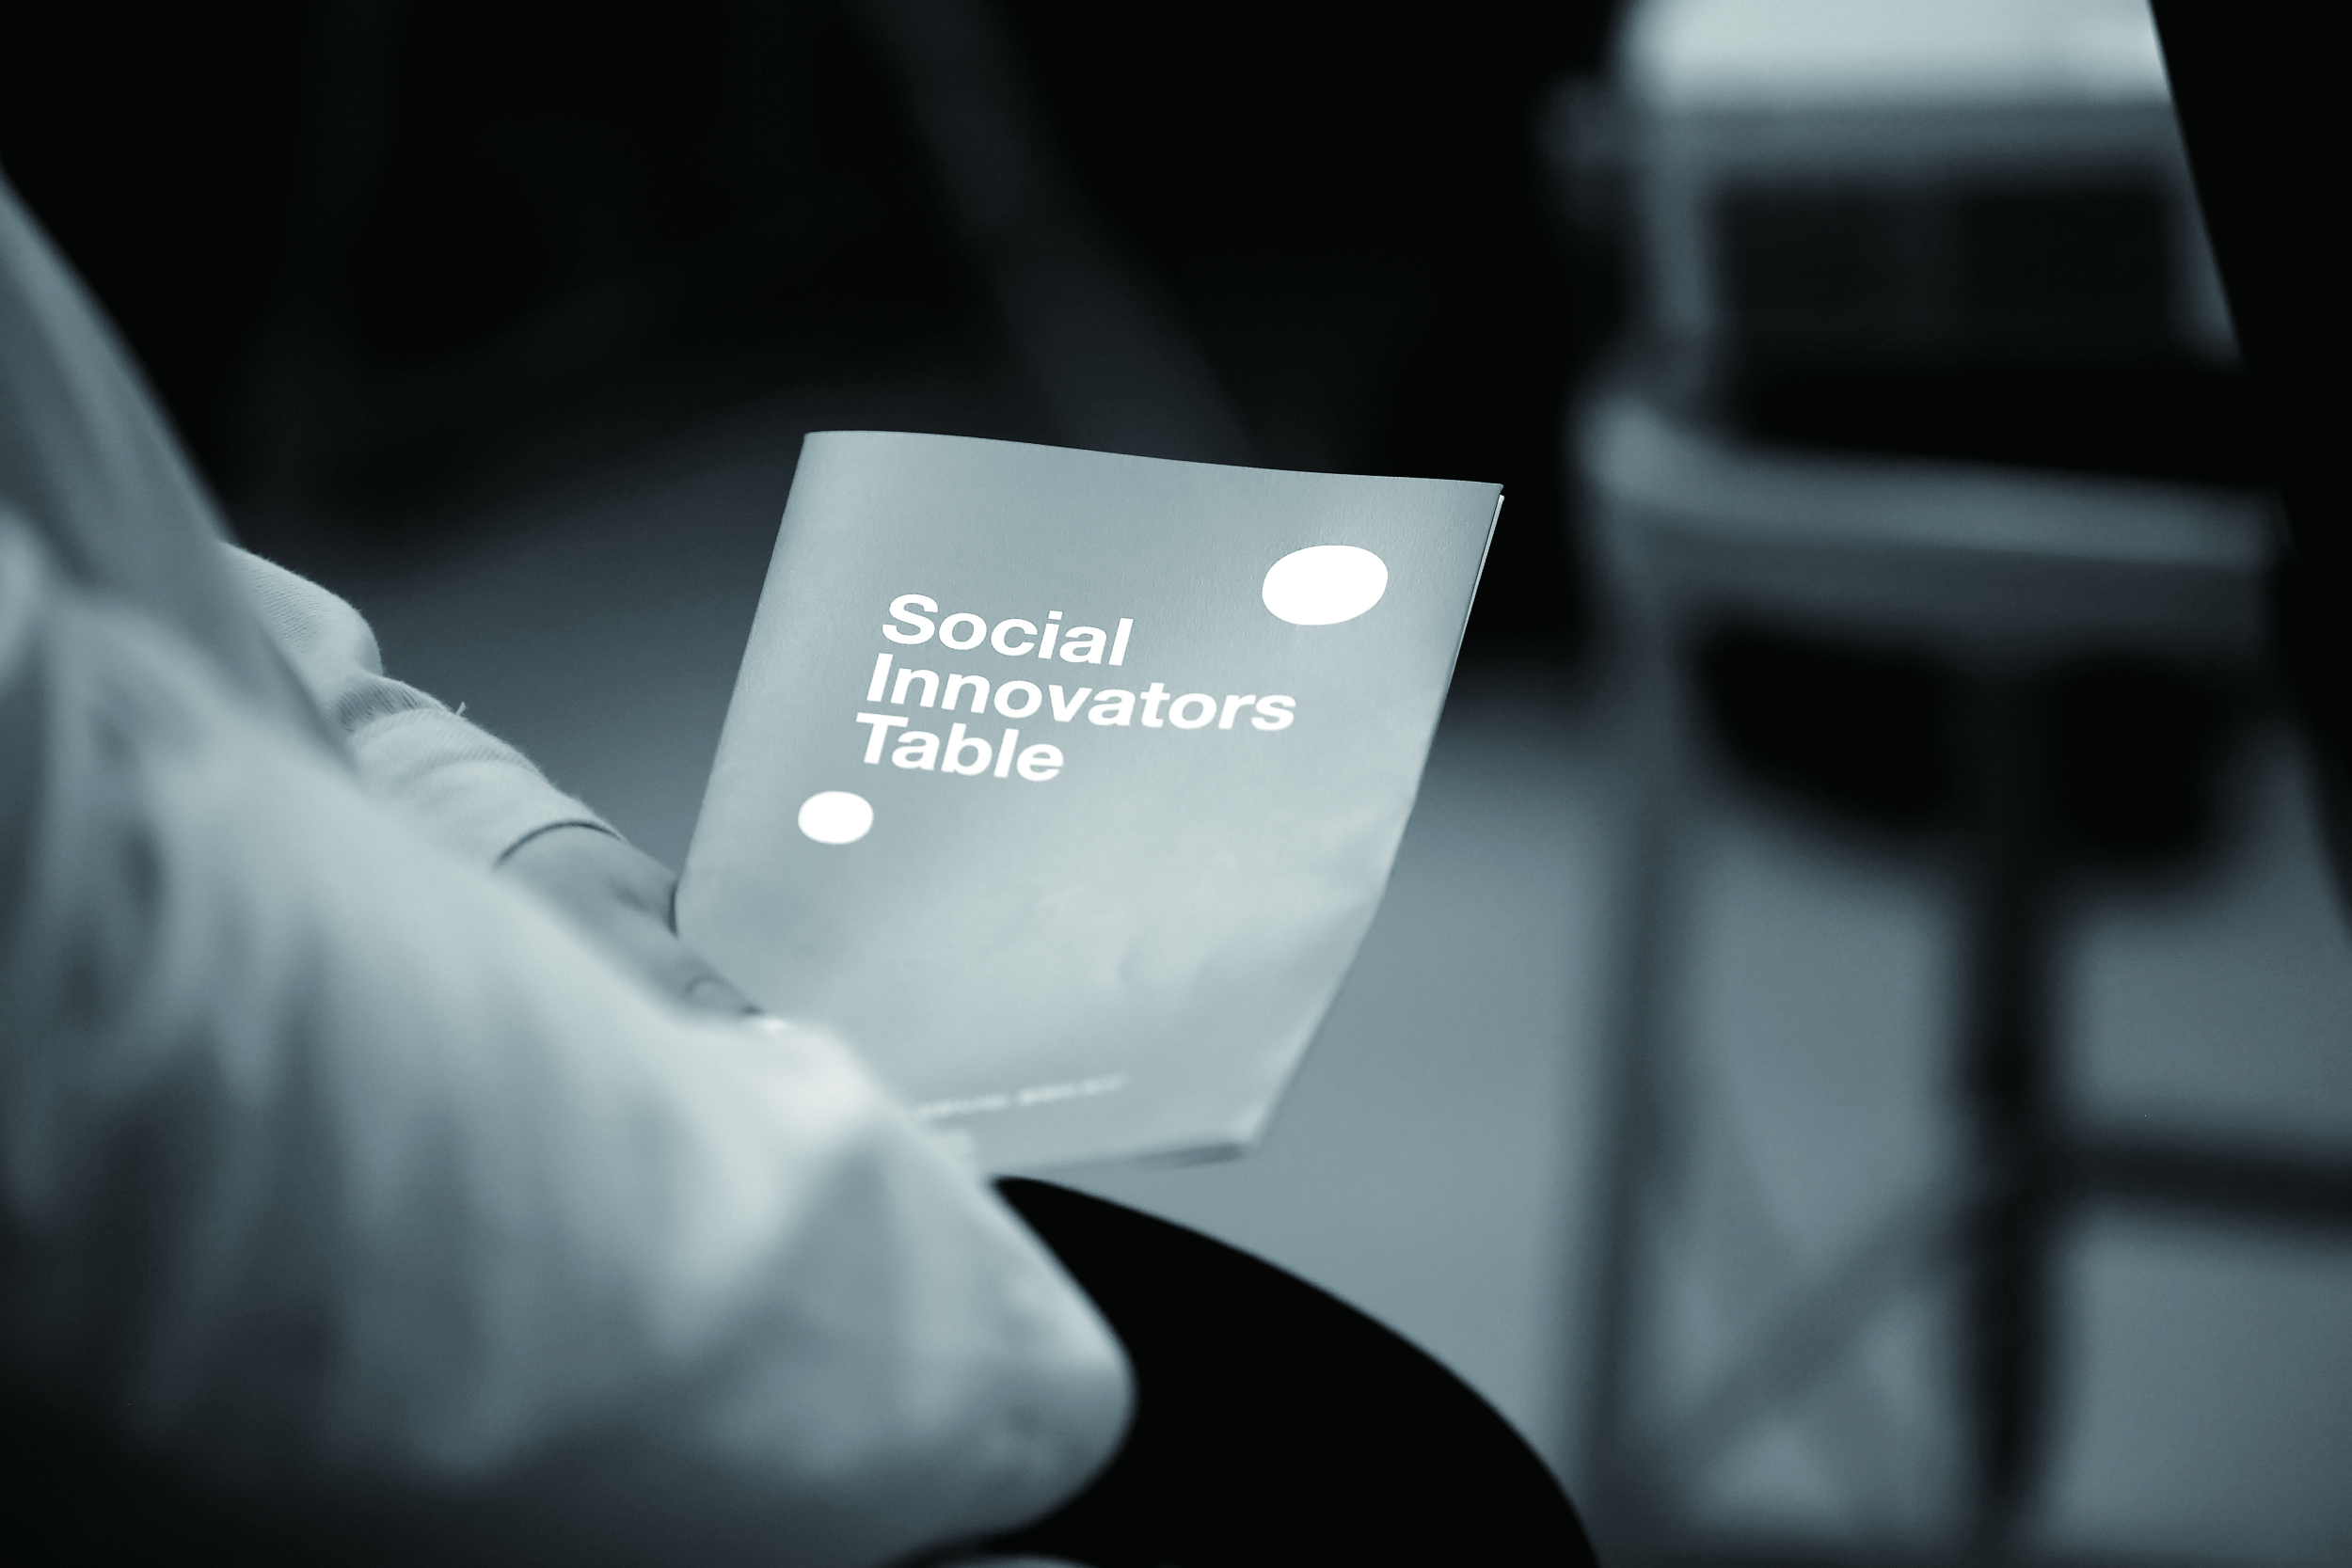 Social Innovators Table 팜플렛 이미지